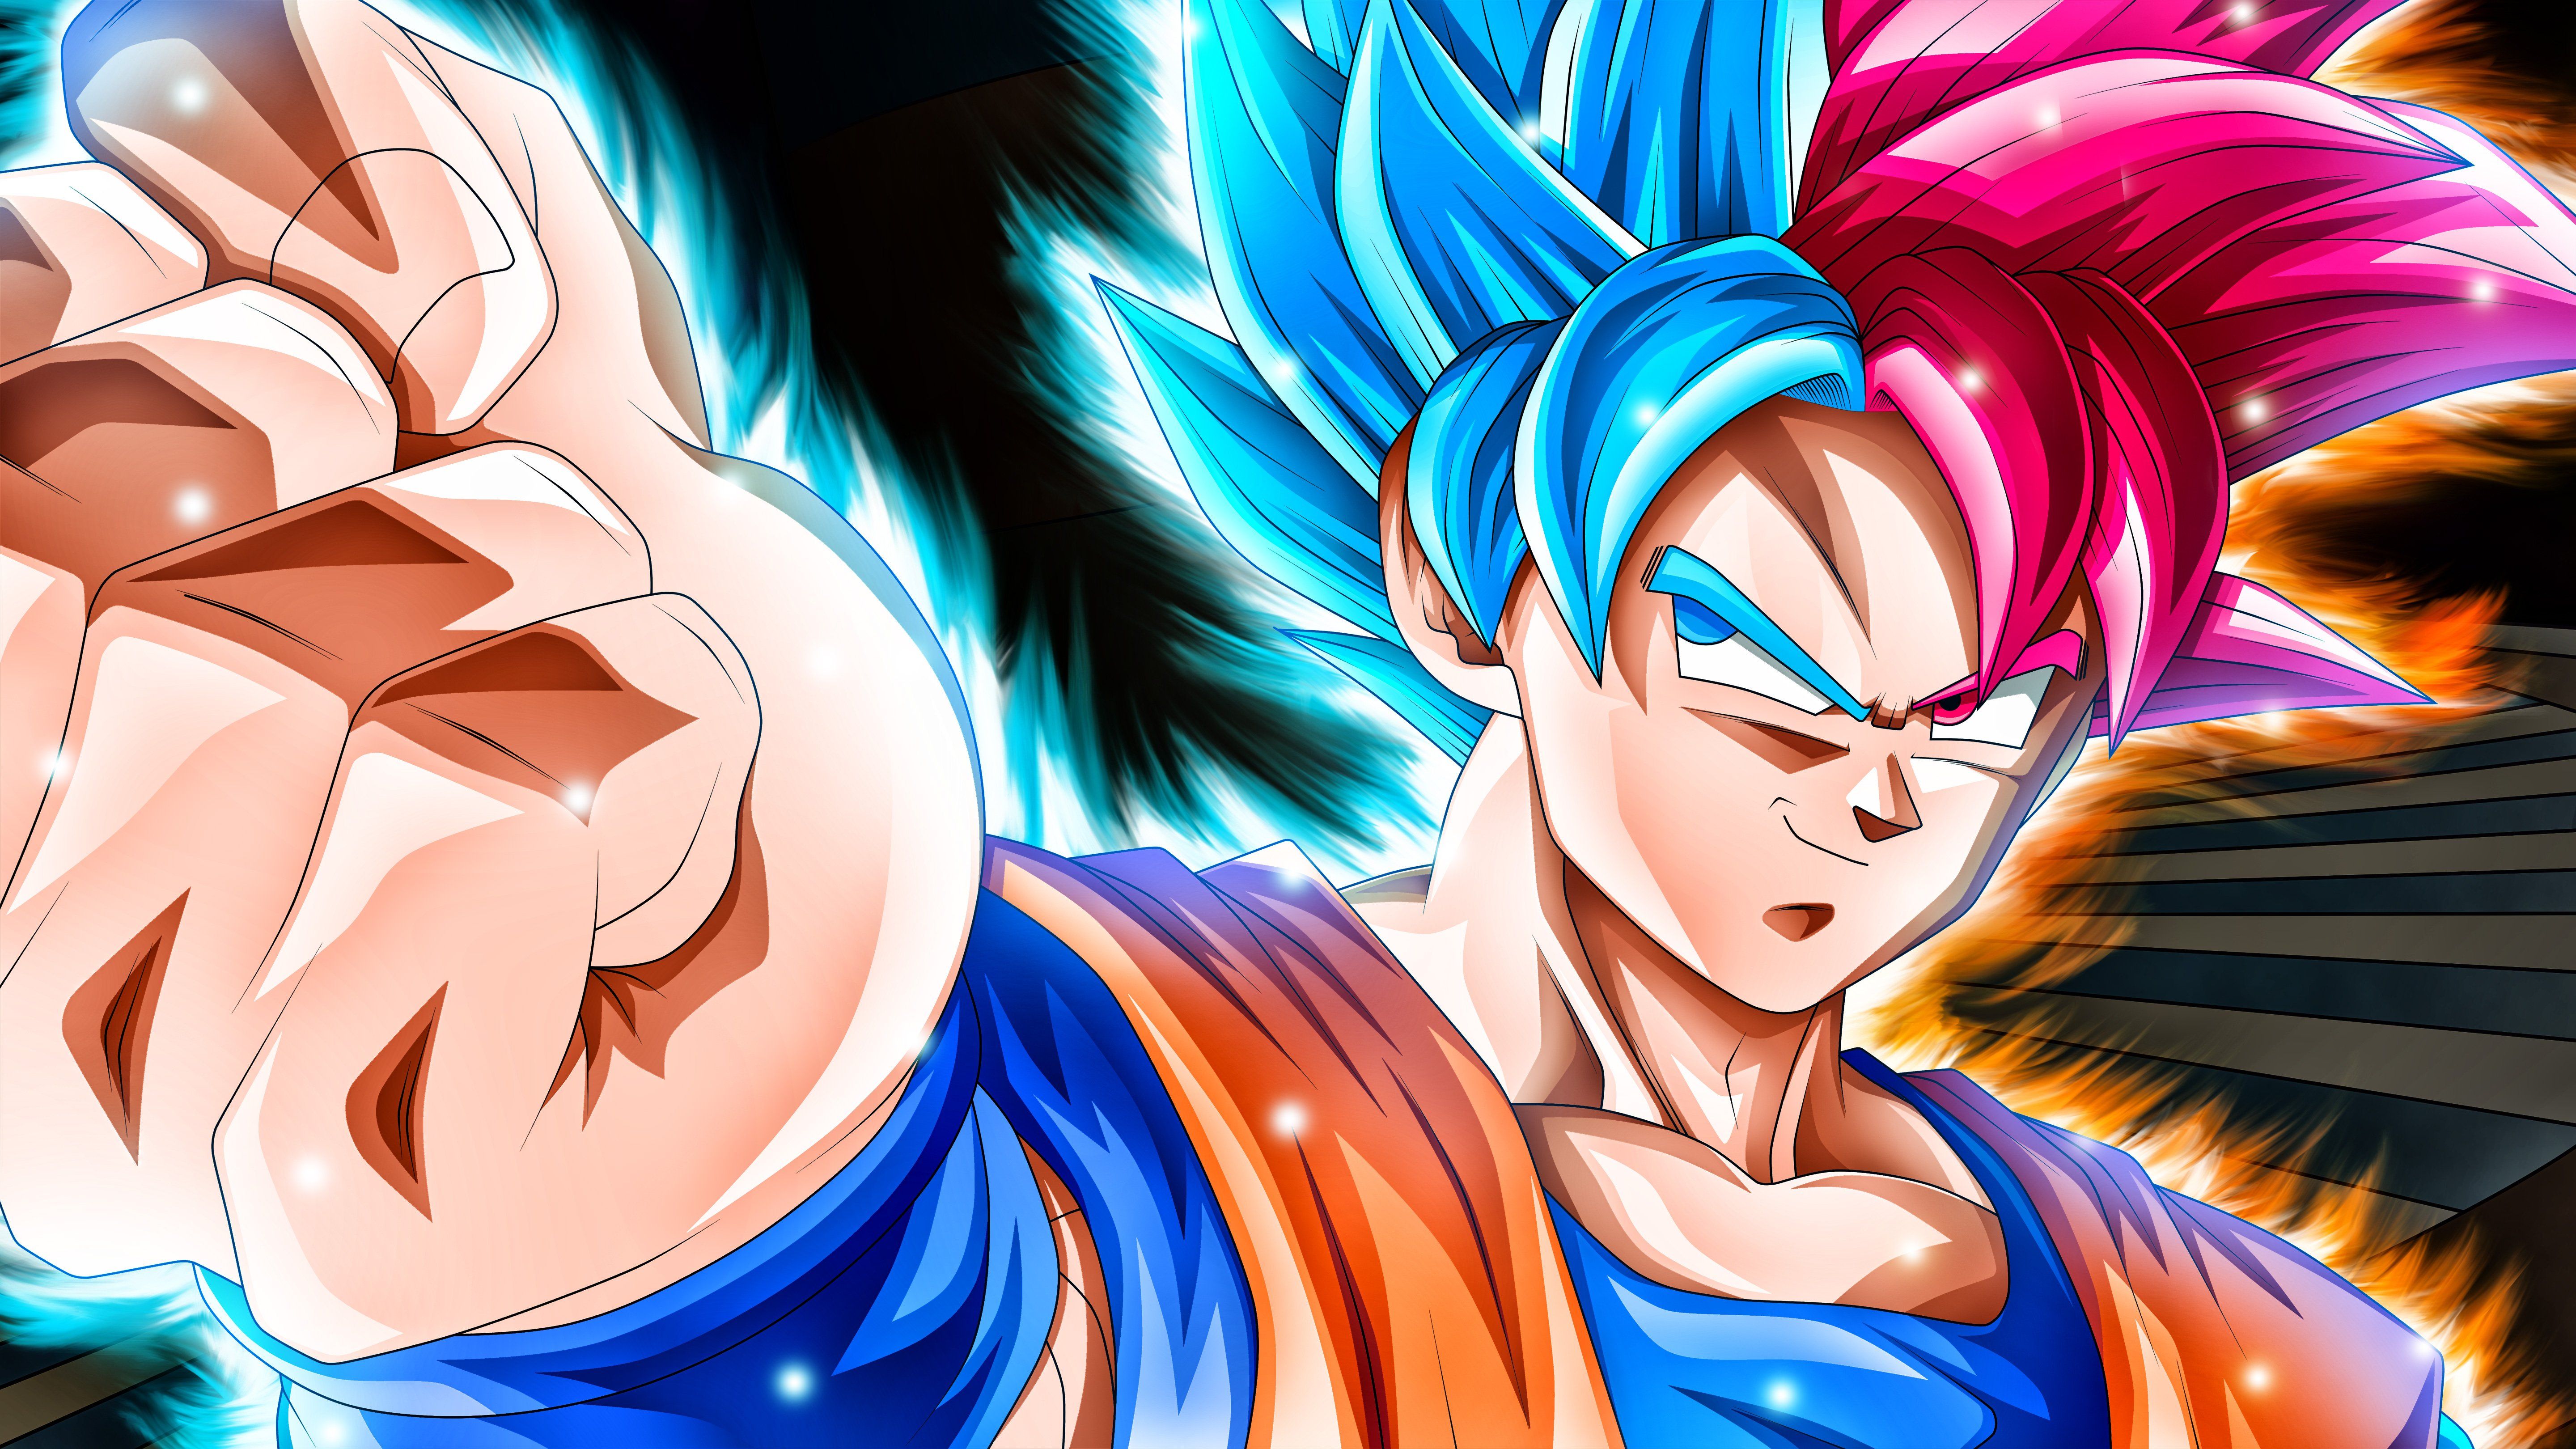 Best Of Goku Super Saiyan Omni God Wallpapers image in 2020.